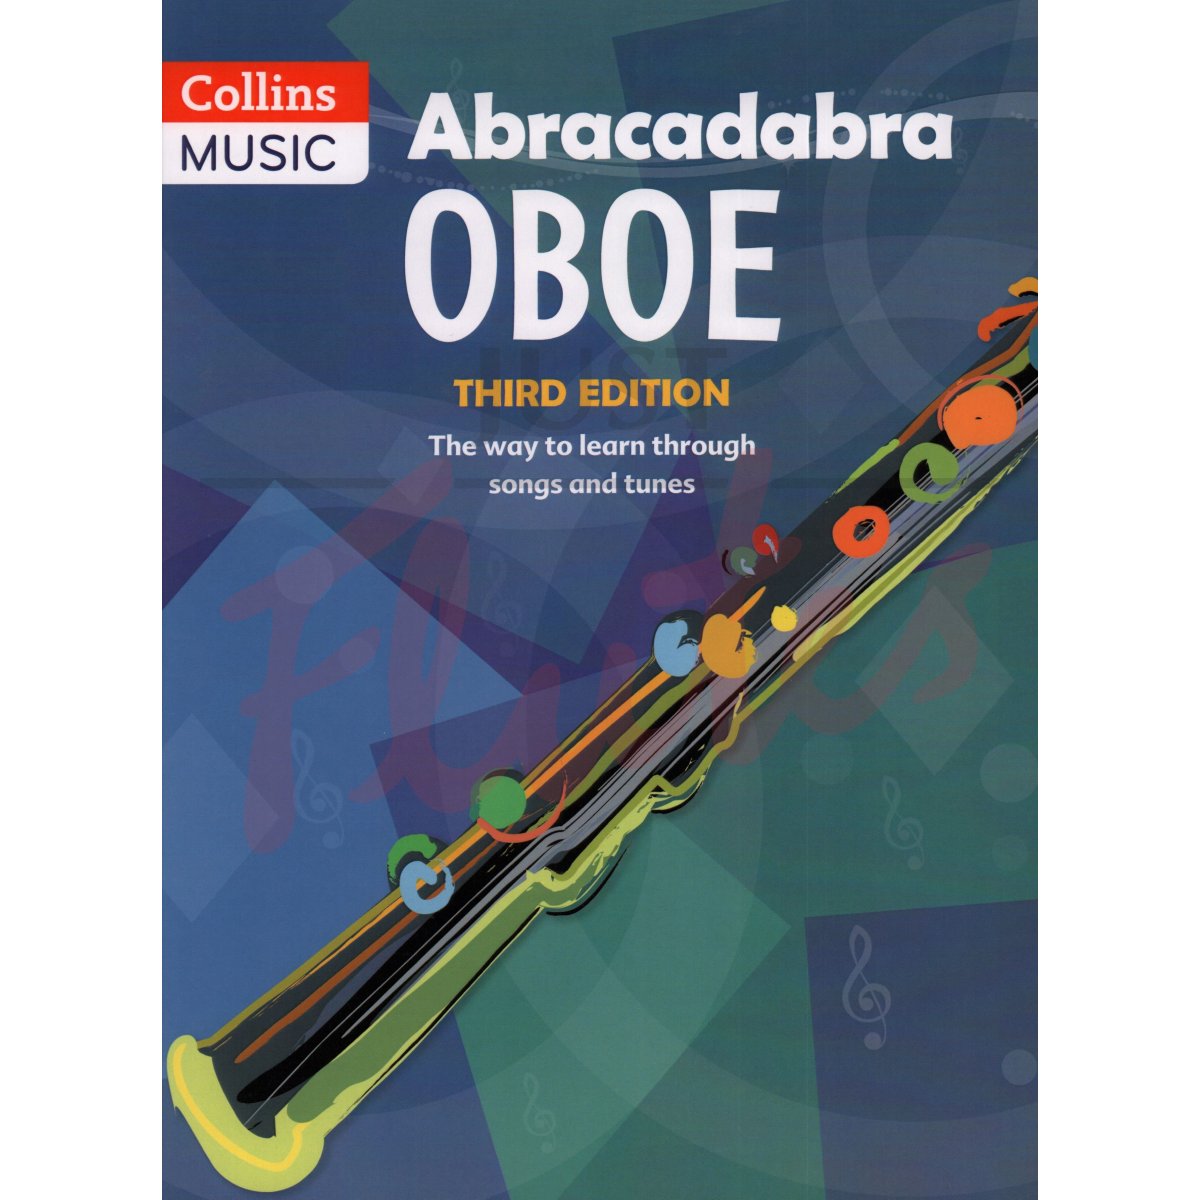 Abracadabra Oboe